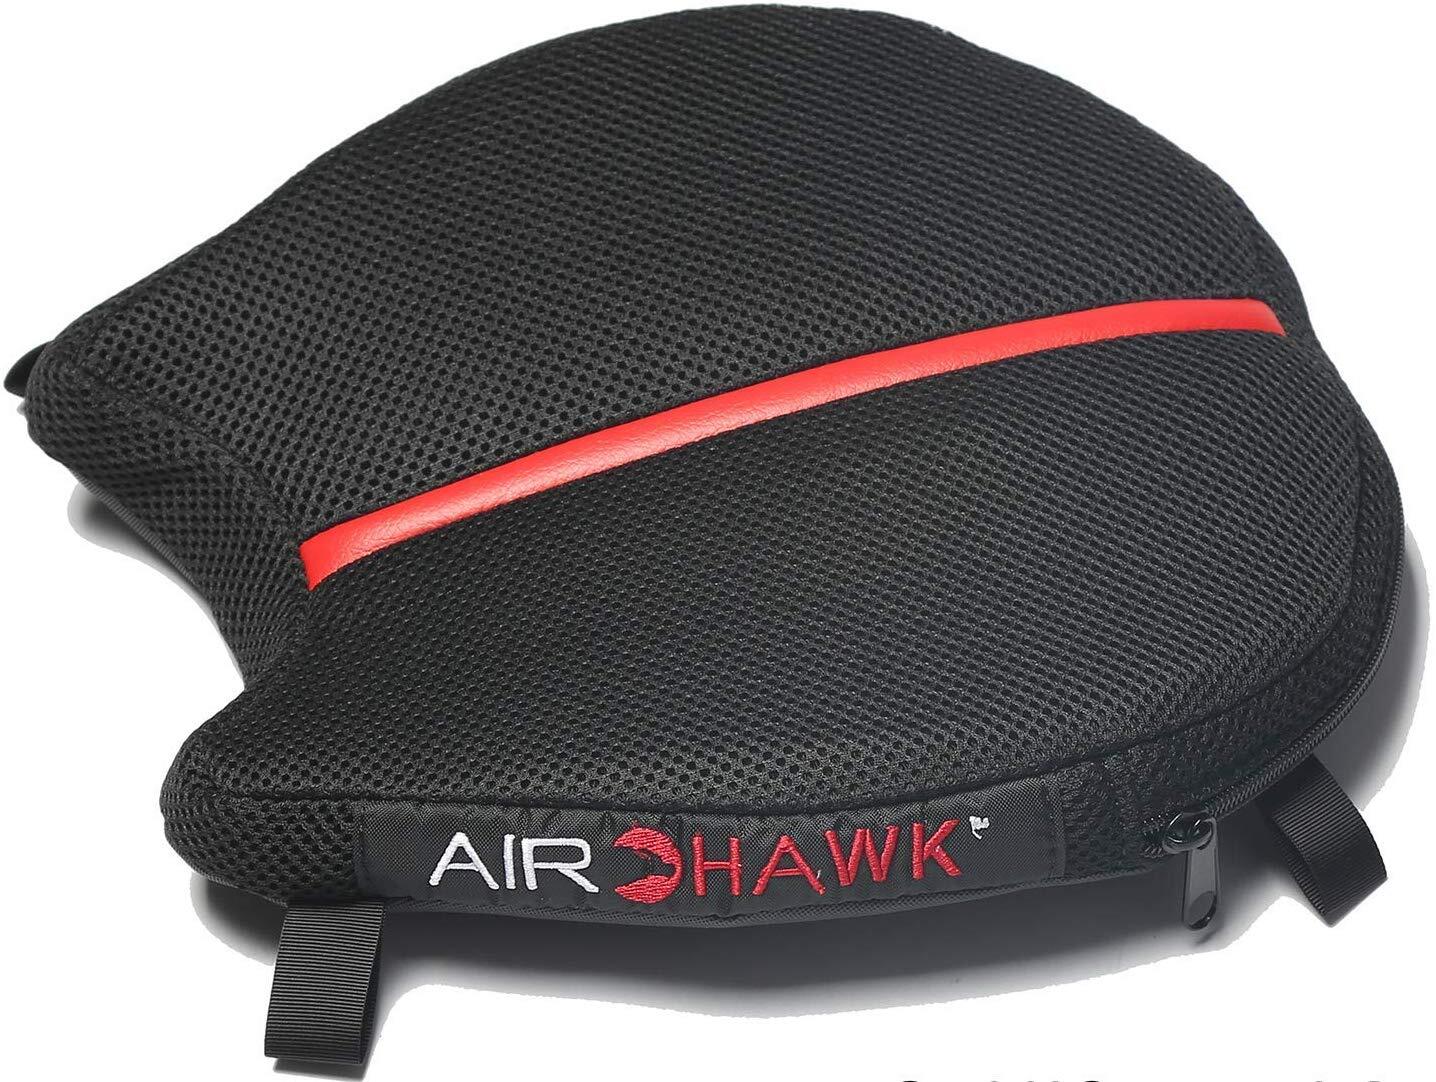 Airhawk 2 Dual Sport Comfort Seat Cushion Air Pad